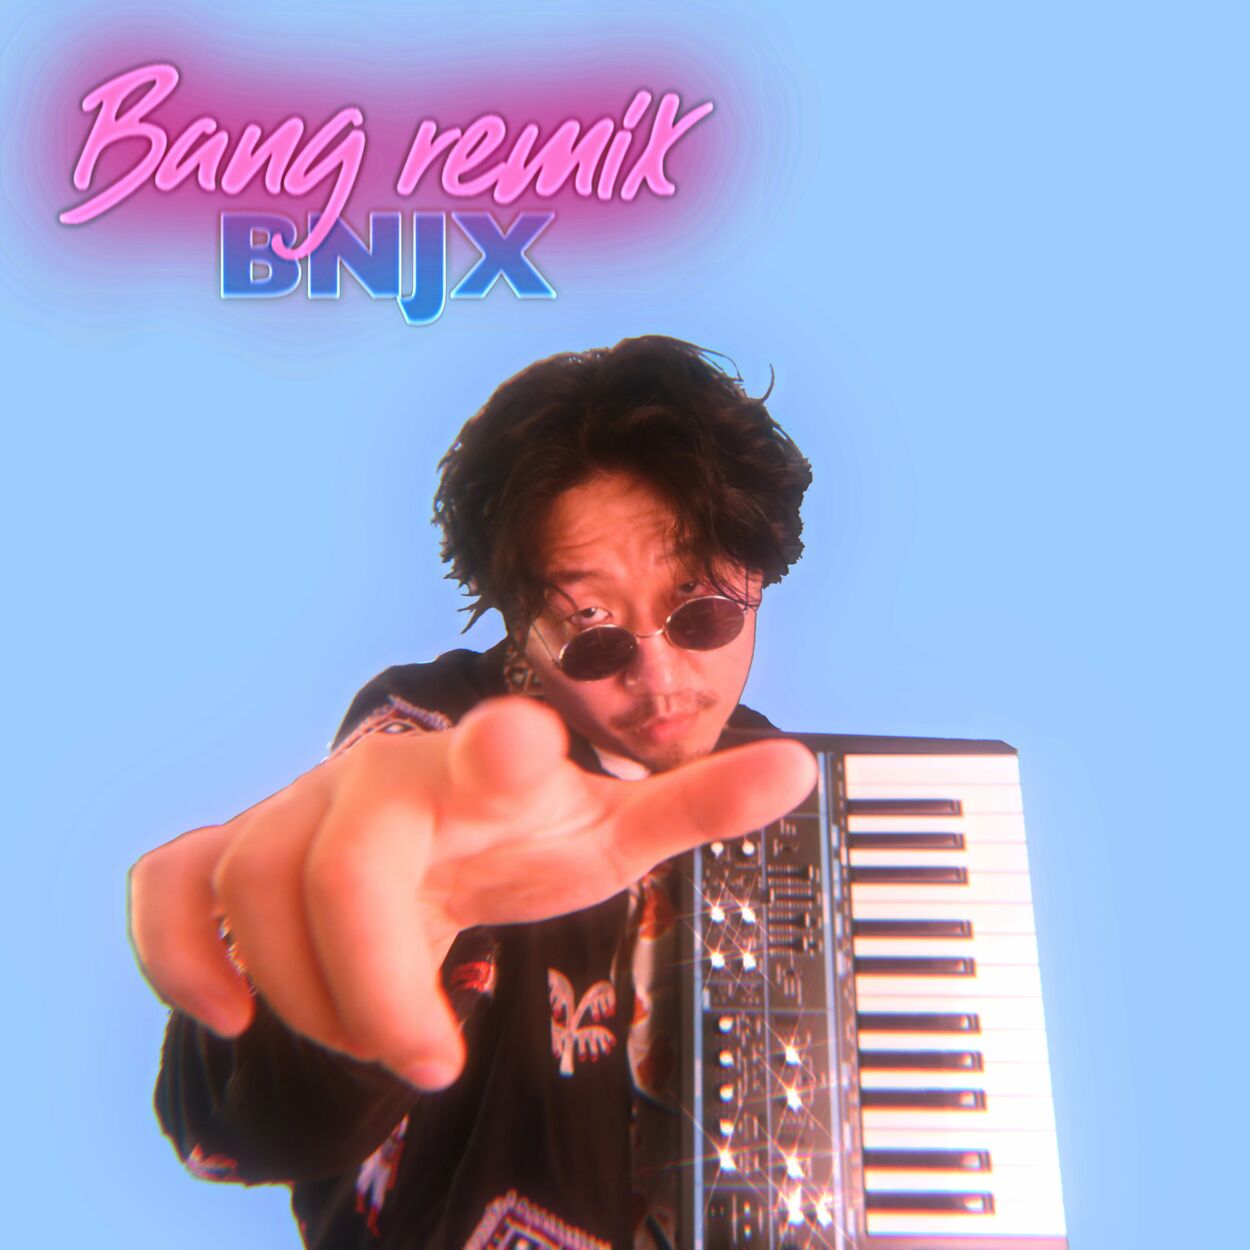 BNJX – BANG REMIX – EP